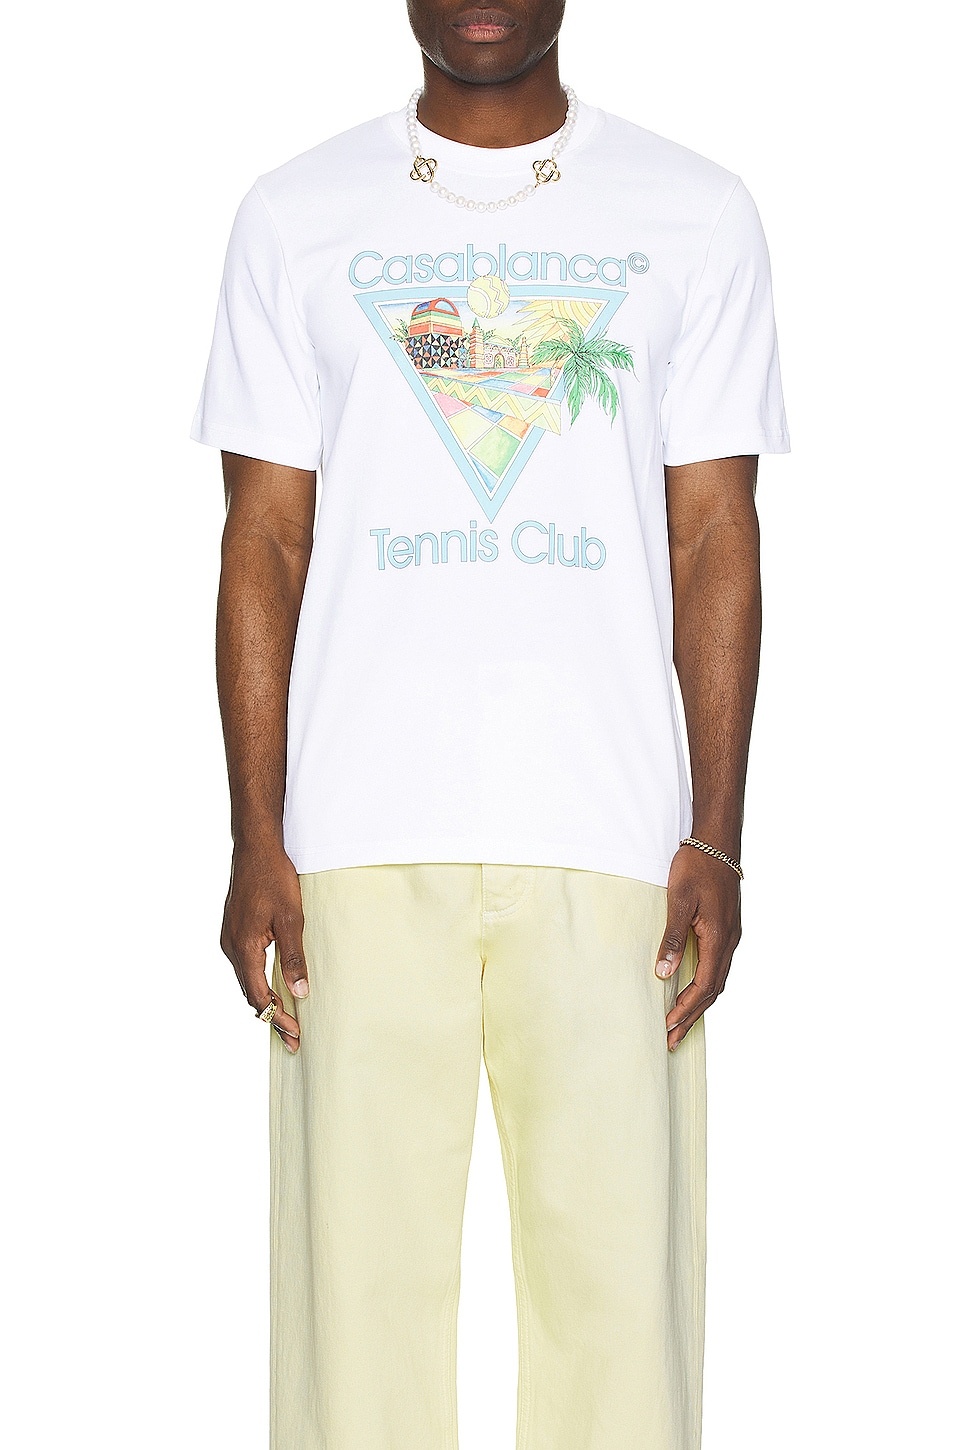 Afro Cubism Tennis Club Printed T-shirt - 3